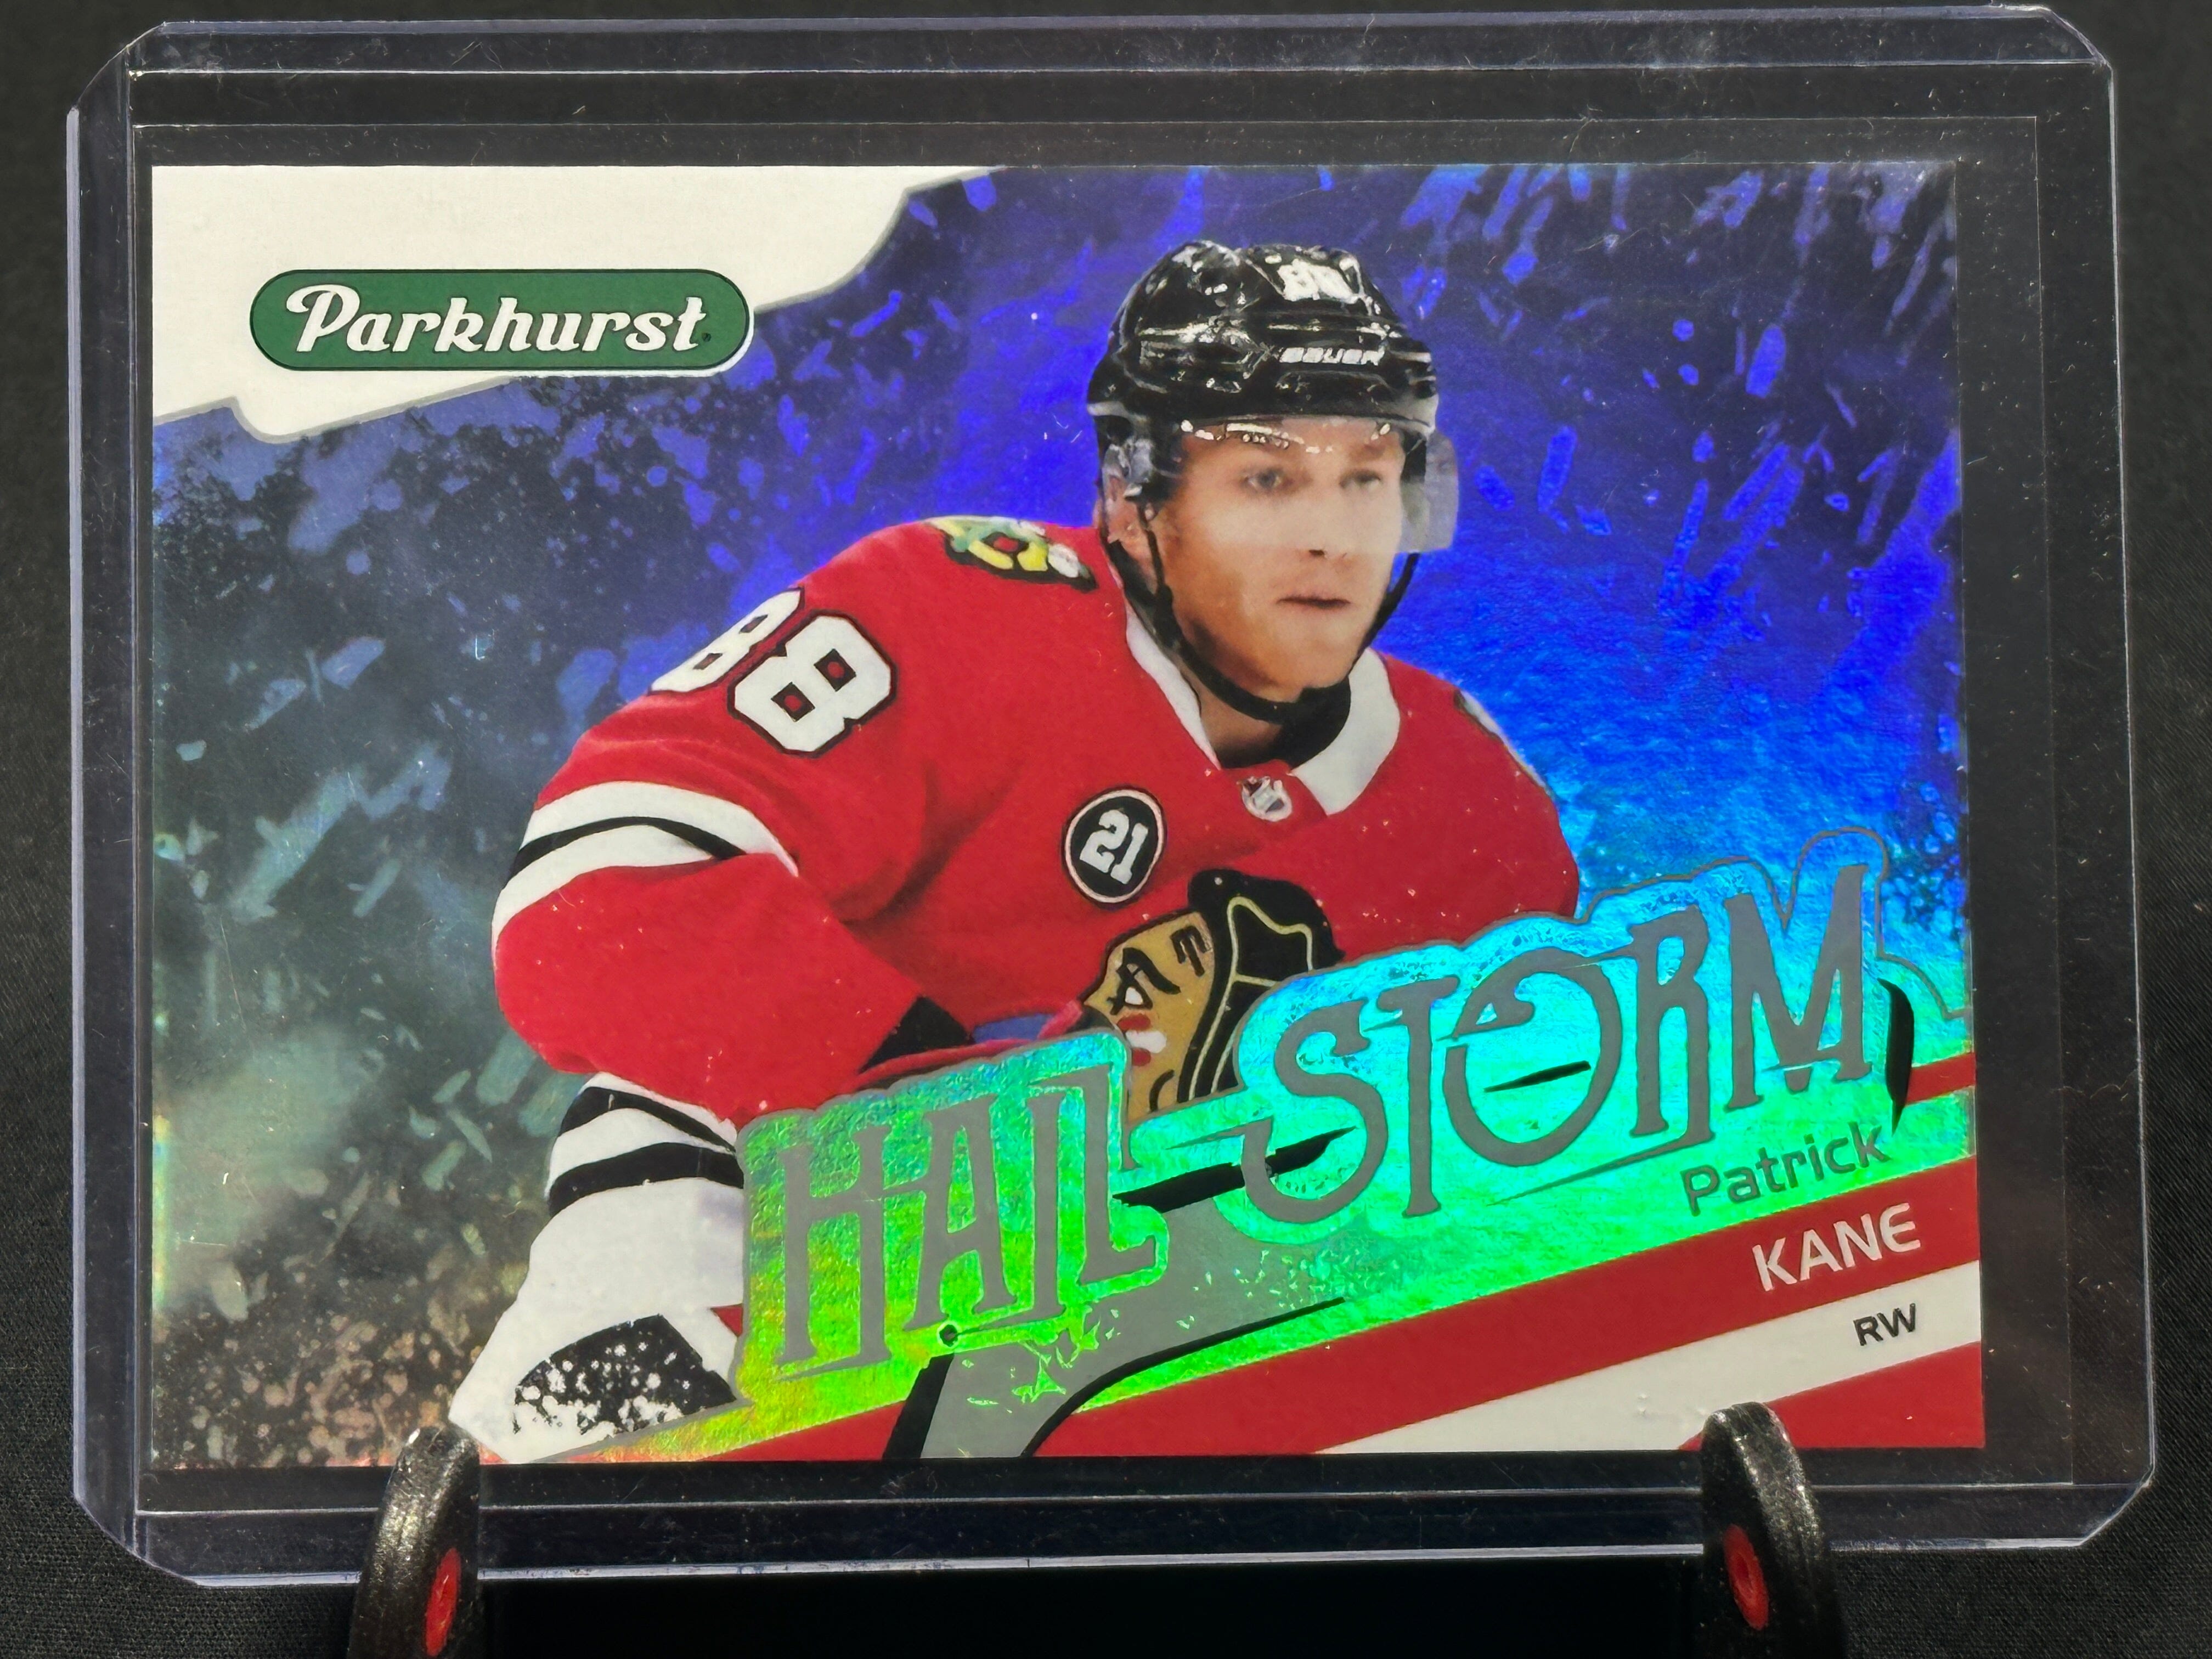 2019-2020 Parkhurst Hockey Hail Storm Gold HS5 Patrick Kane Chicago Blackhawks Shootnscore.com 